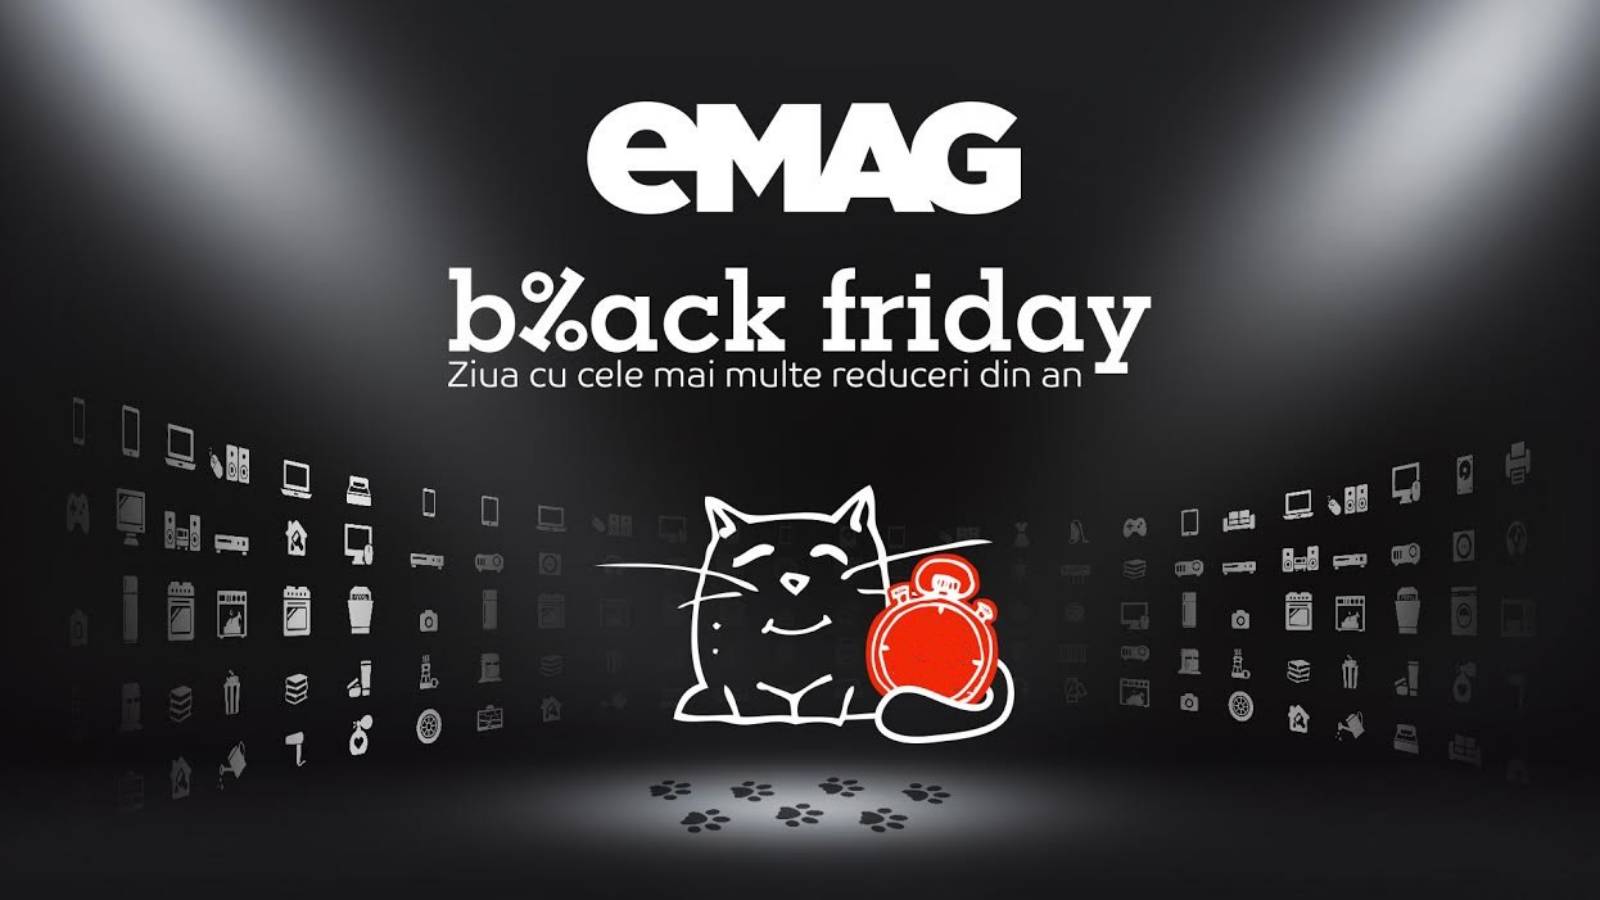 eMAG BLACK FRIDAY lista 30 produkter rabatter